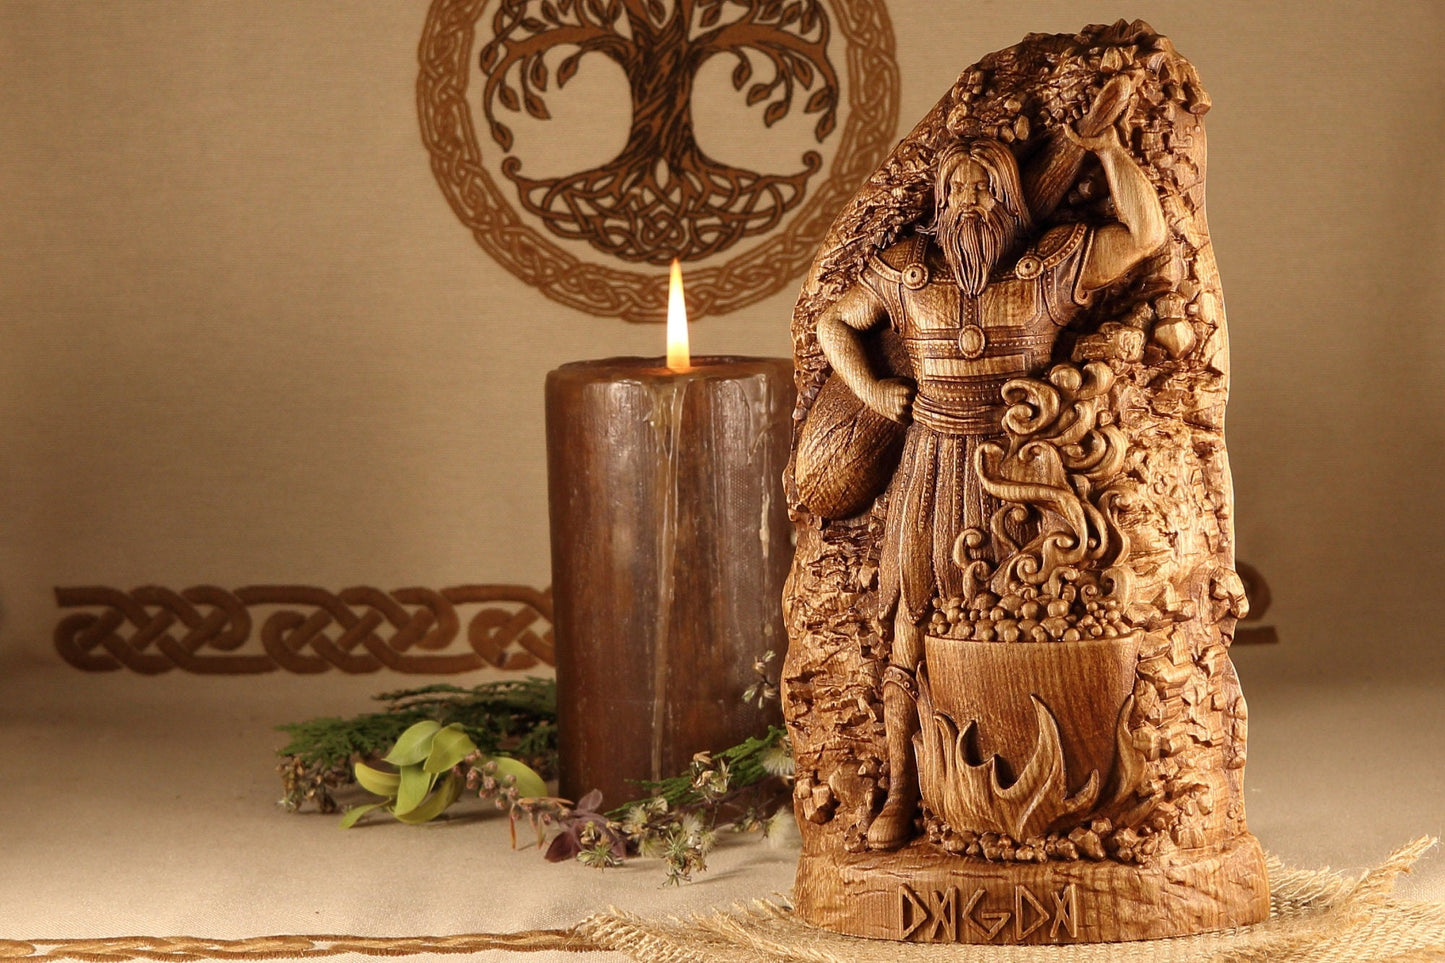 Dagda Wood sculpture art, Carved wood statue